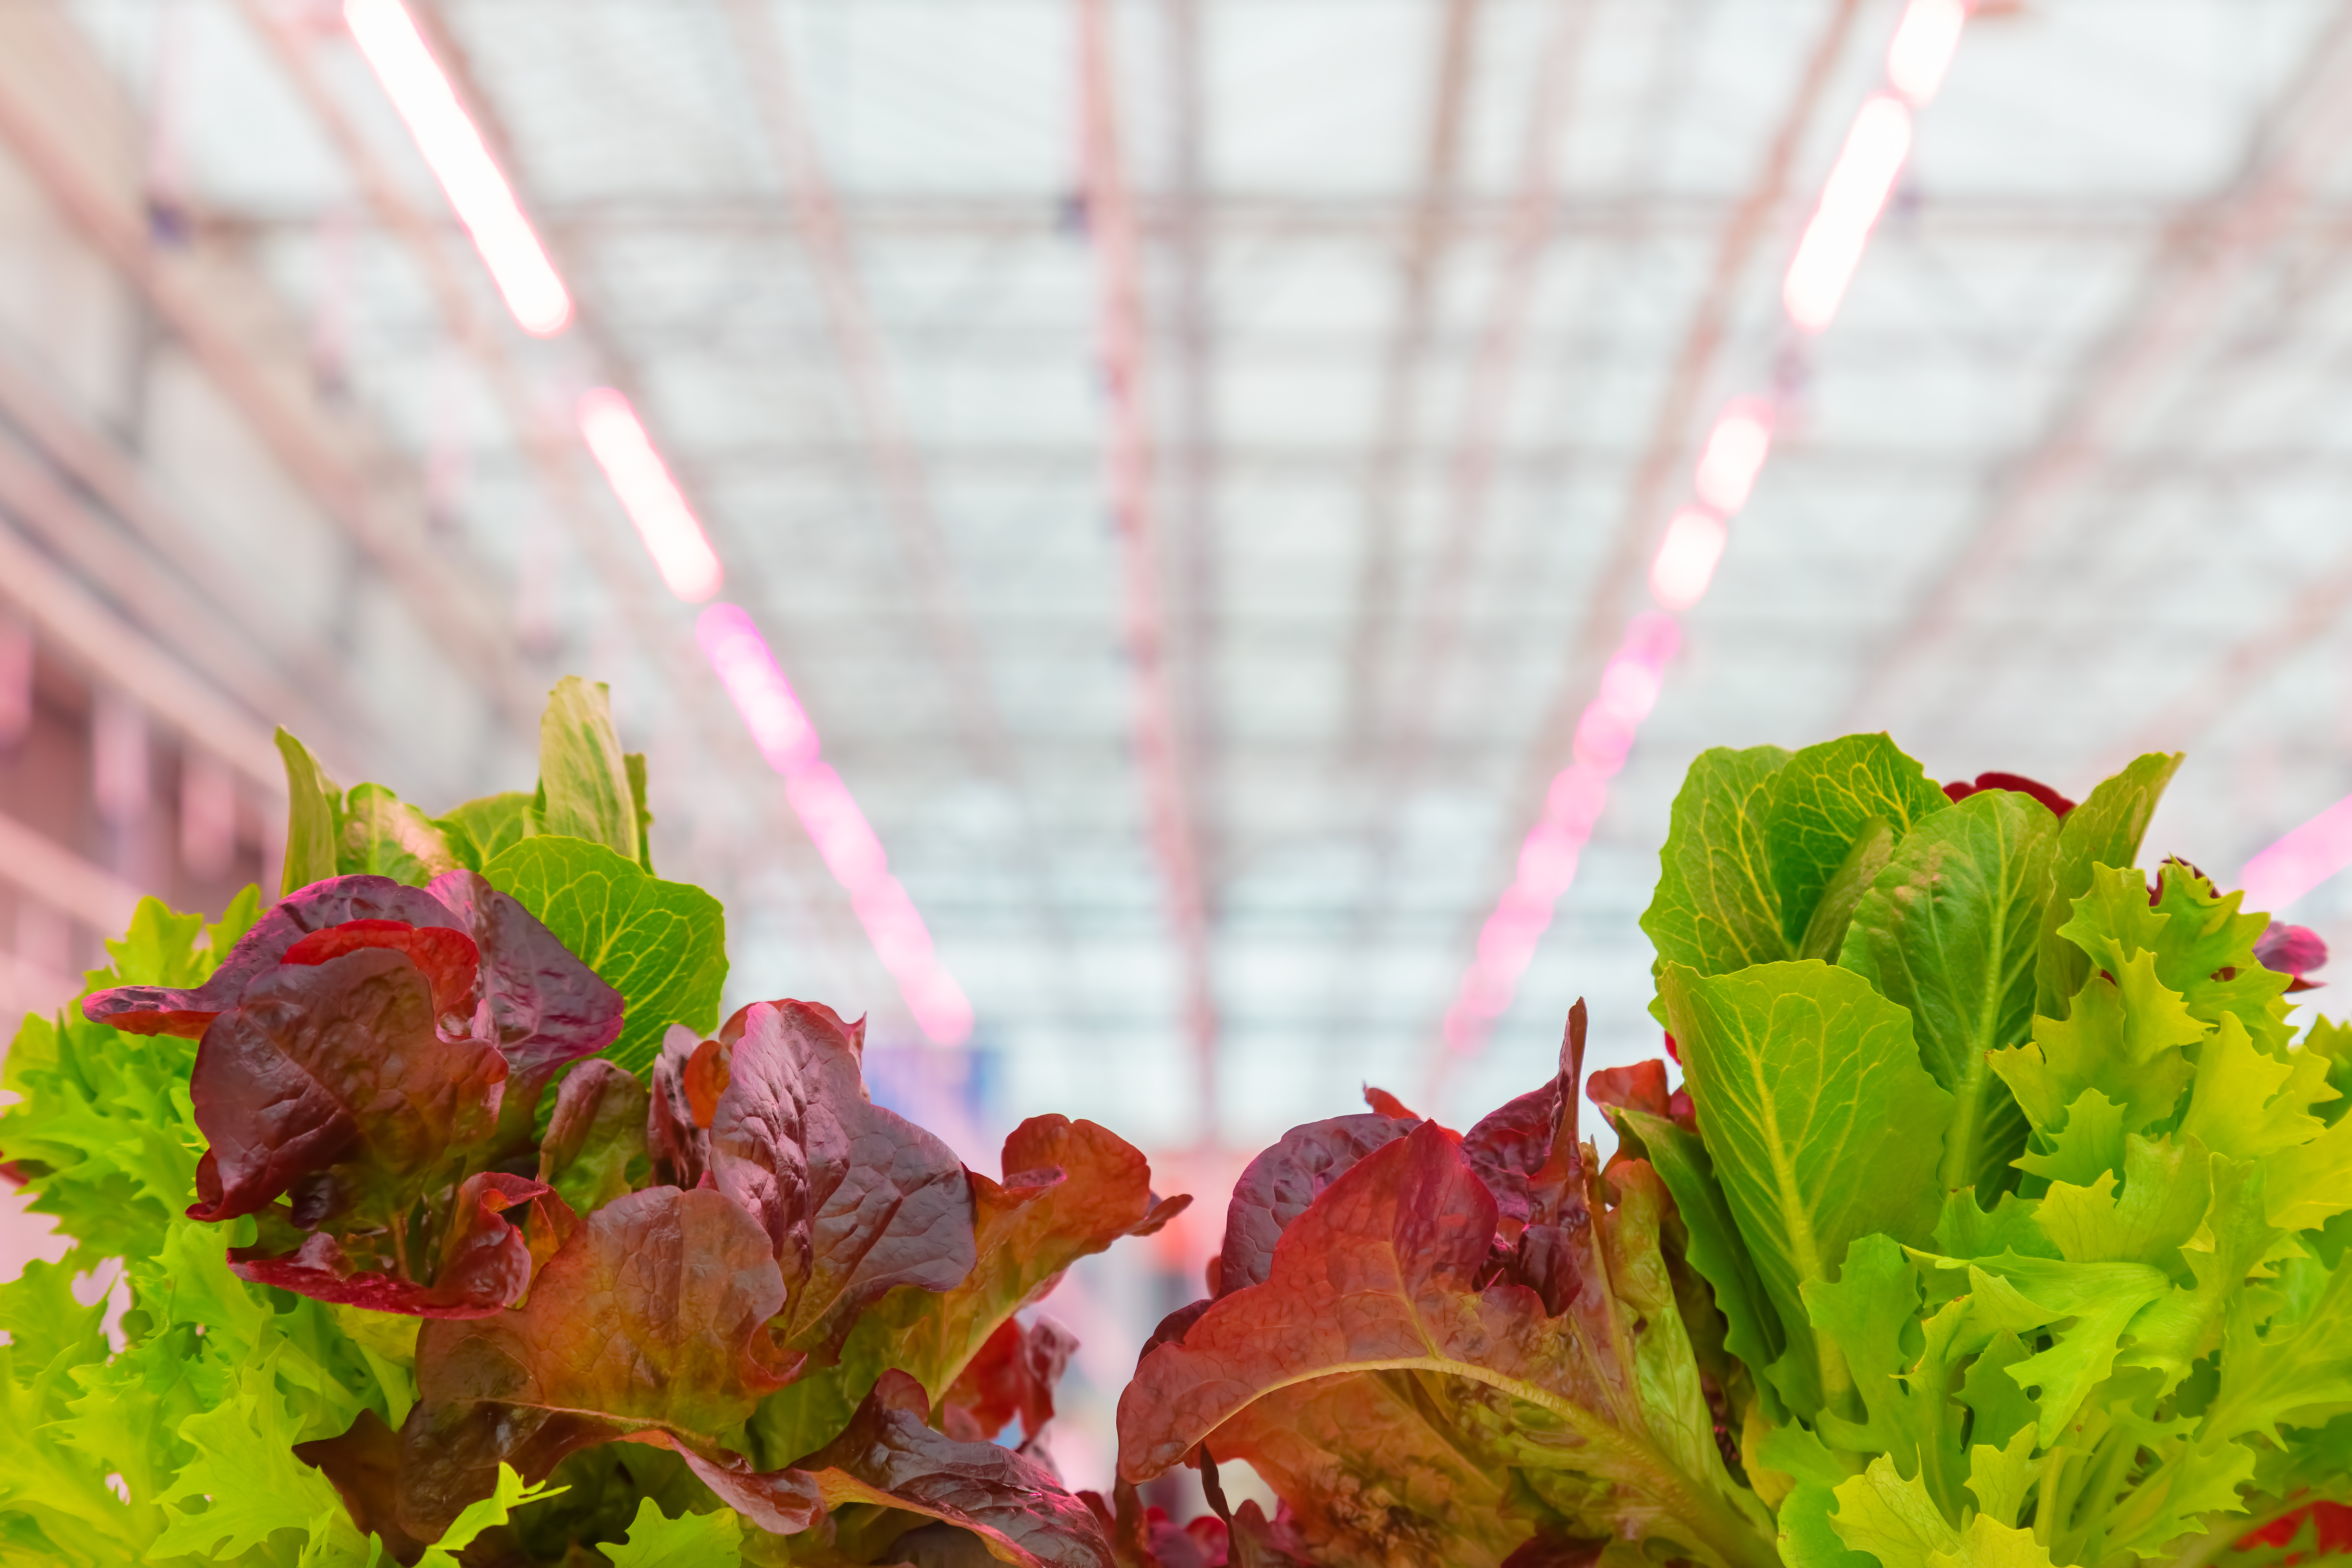 Lettuce grown under LED luminaires in greenhouse